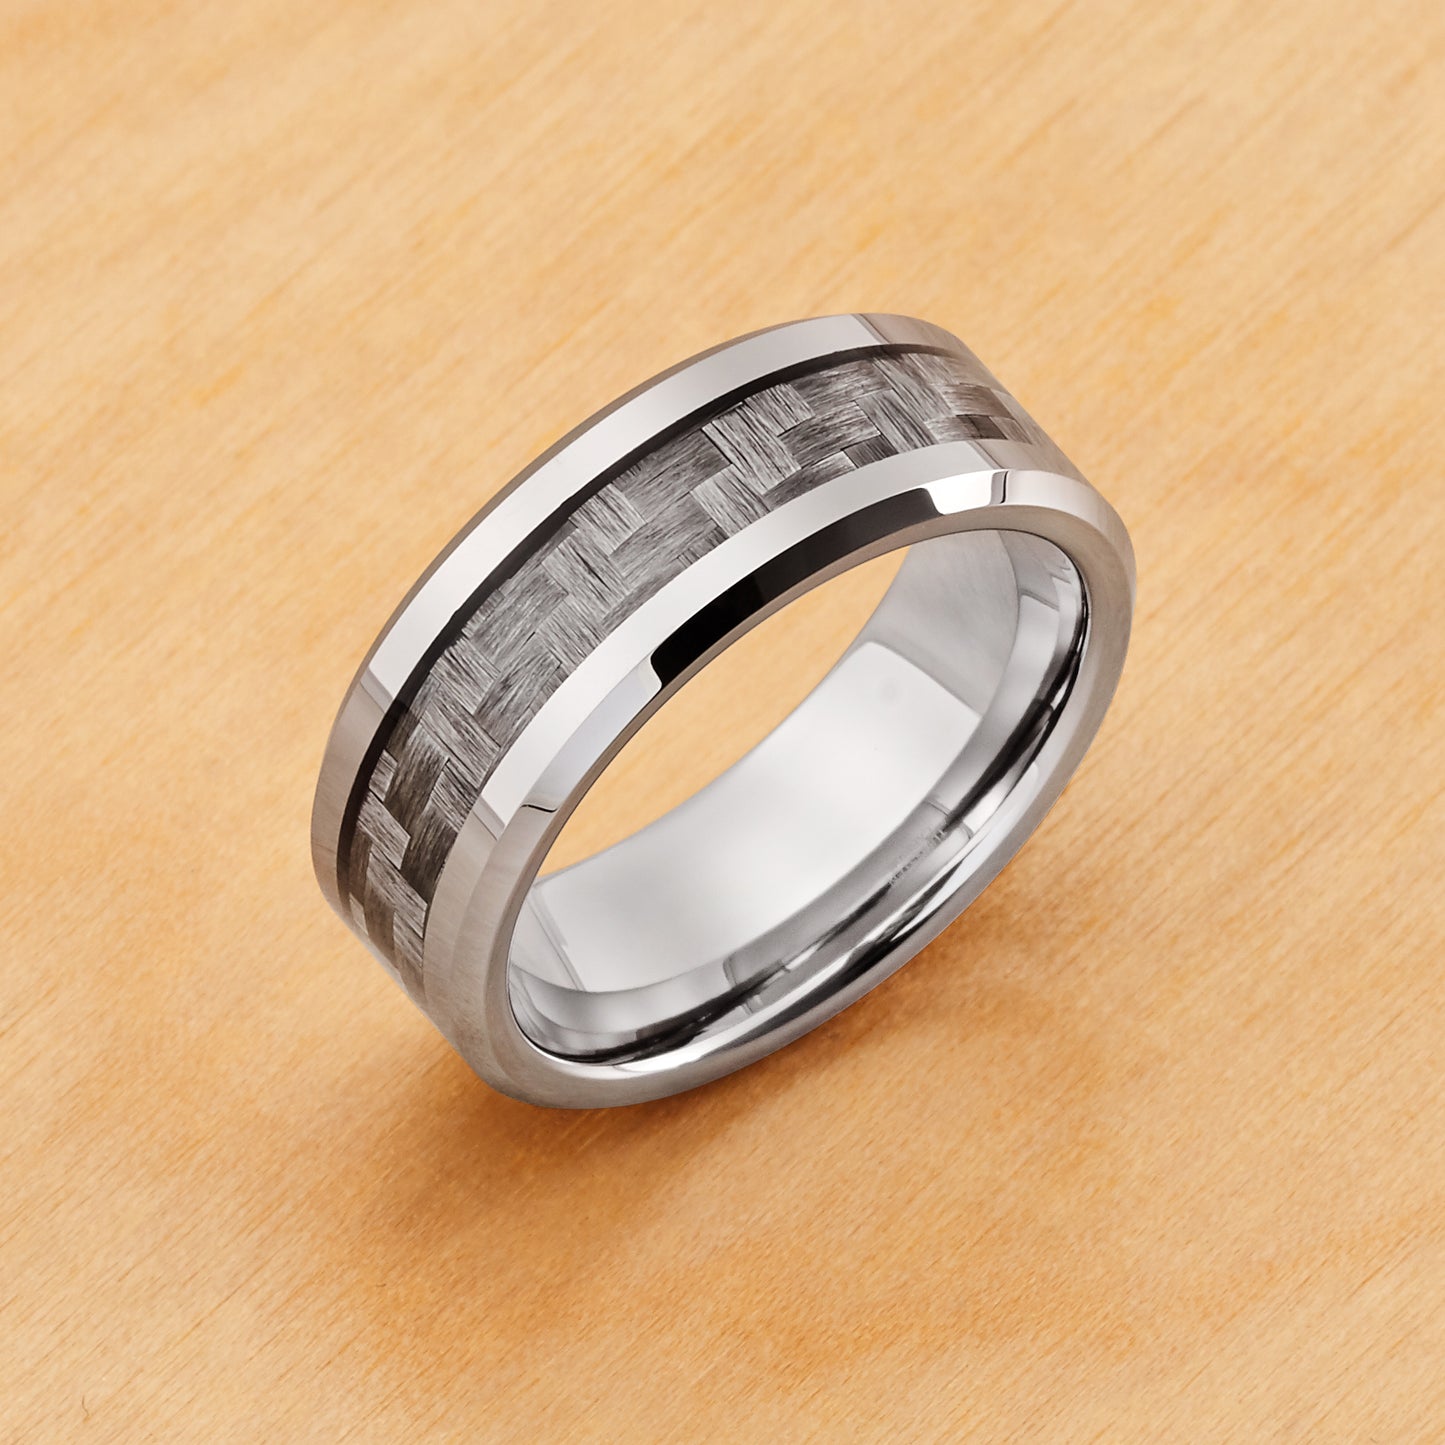 TR375 - Rhodium Plating - Tungsten Ring 8mm, Dark Grey Carbon Fiber Weave Inlay